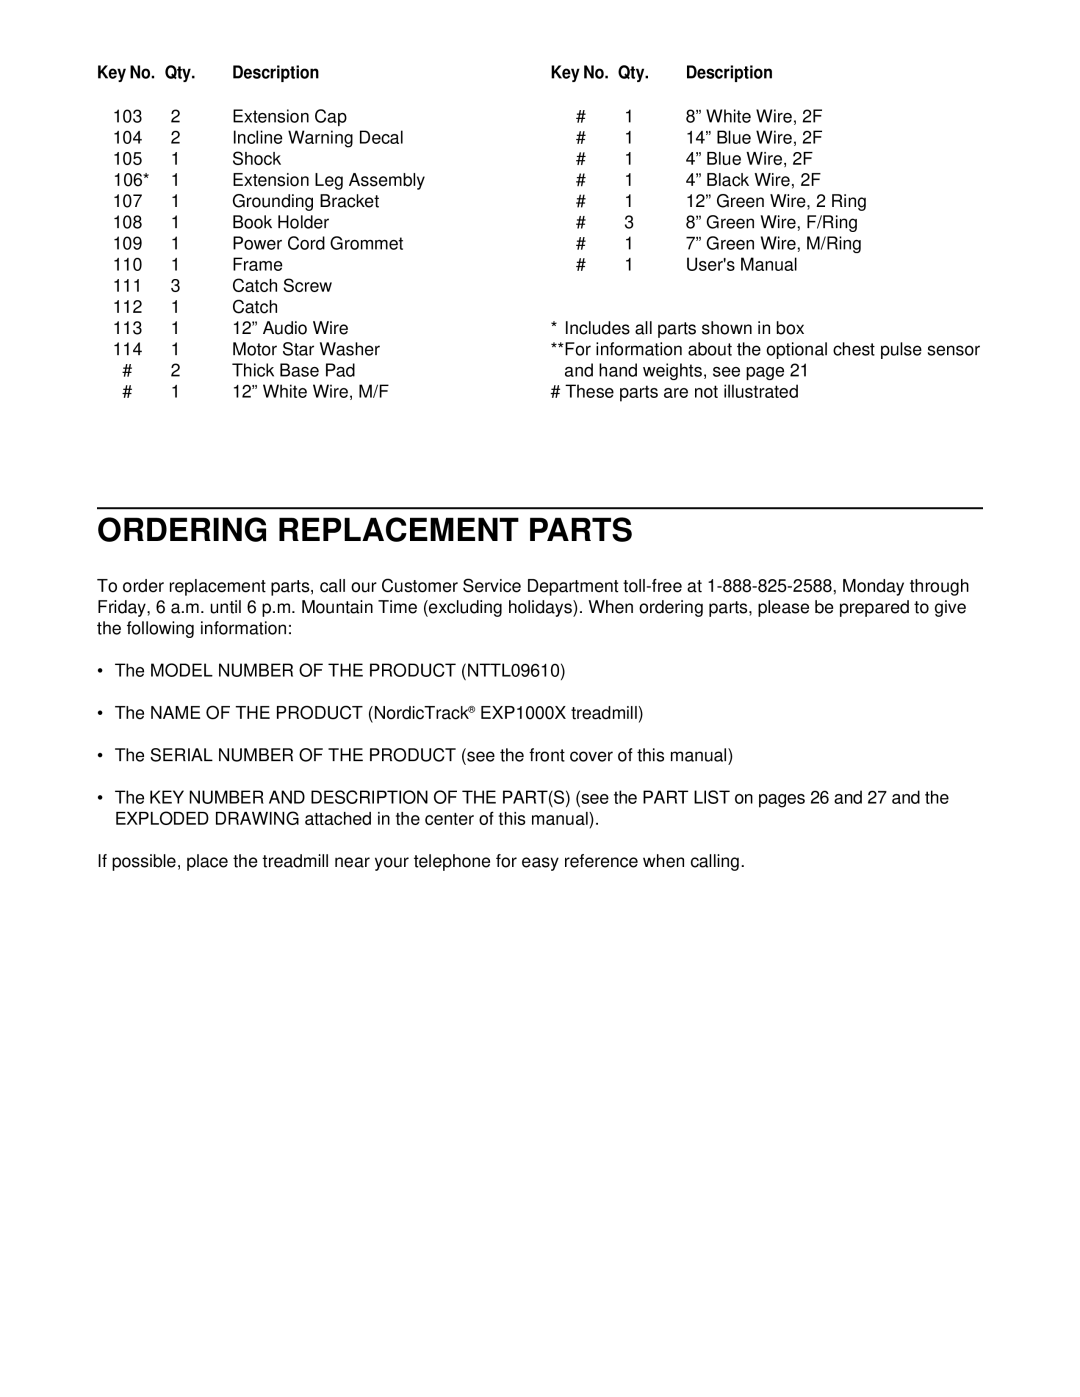 NordicTrack NTTL09610 user manual Ordering Replacement Parts, Description 